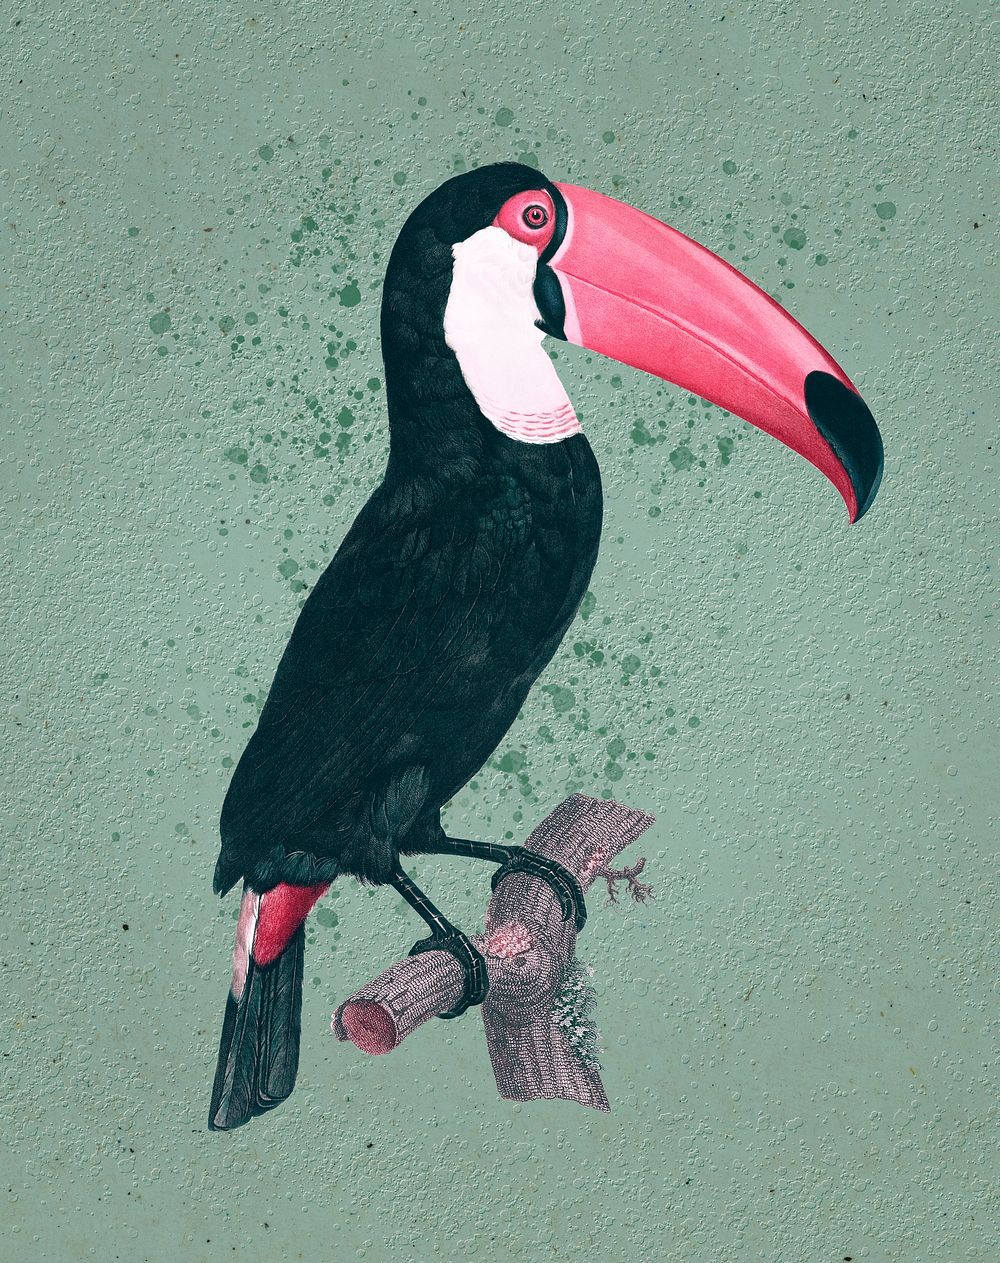 Toco toucan  vintage illustration, remix from original artwork.